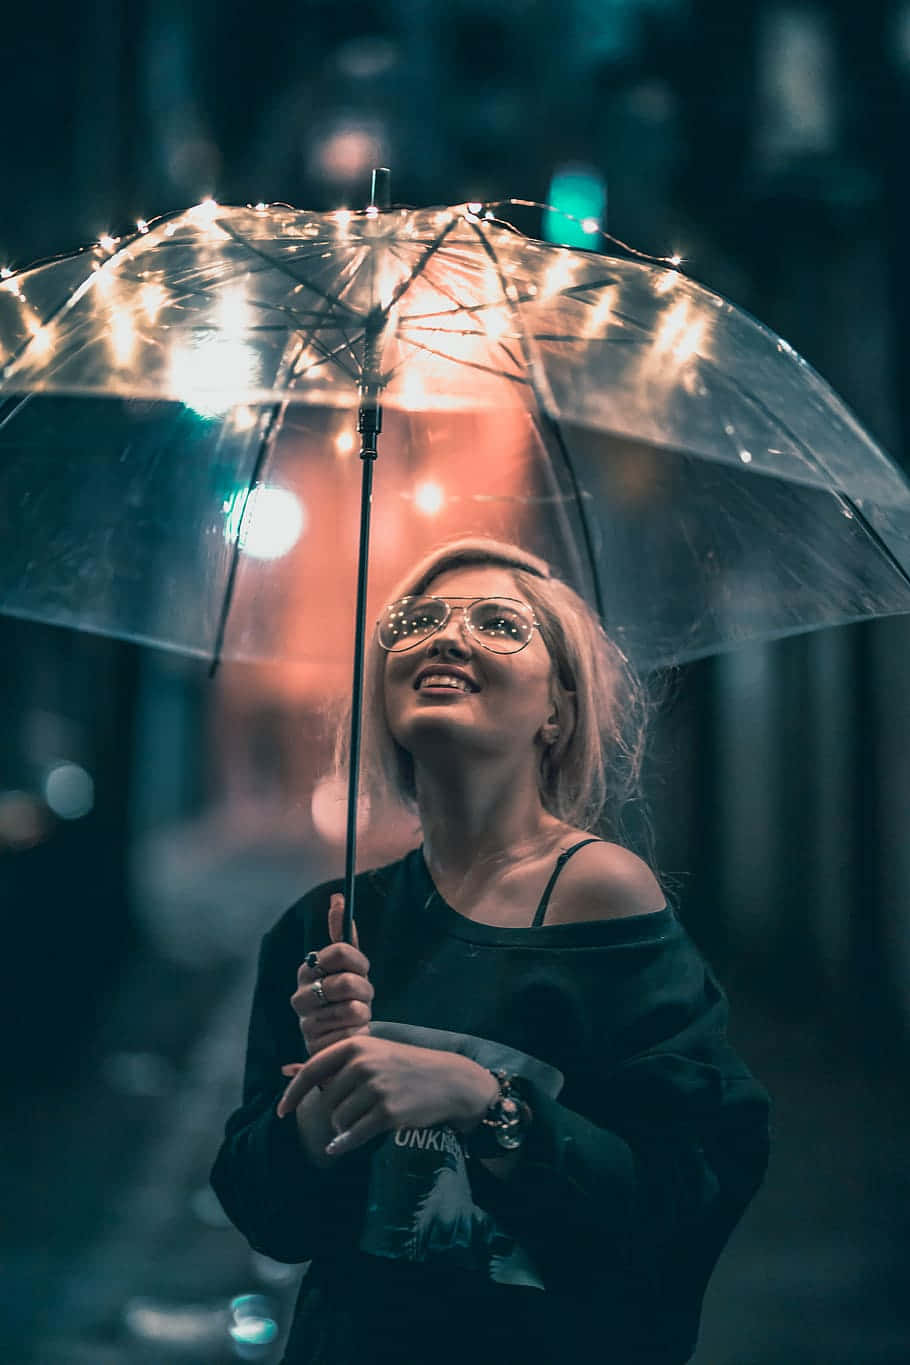 Illuminated Umbrella Nighttime Portrait Background